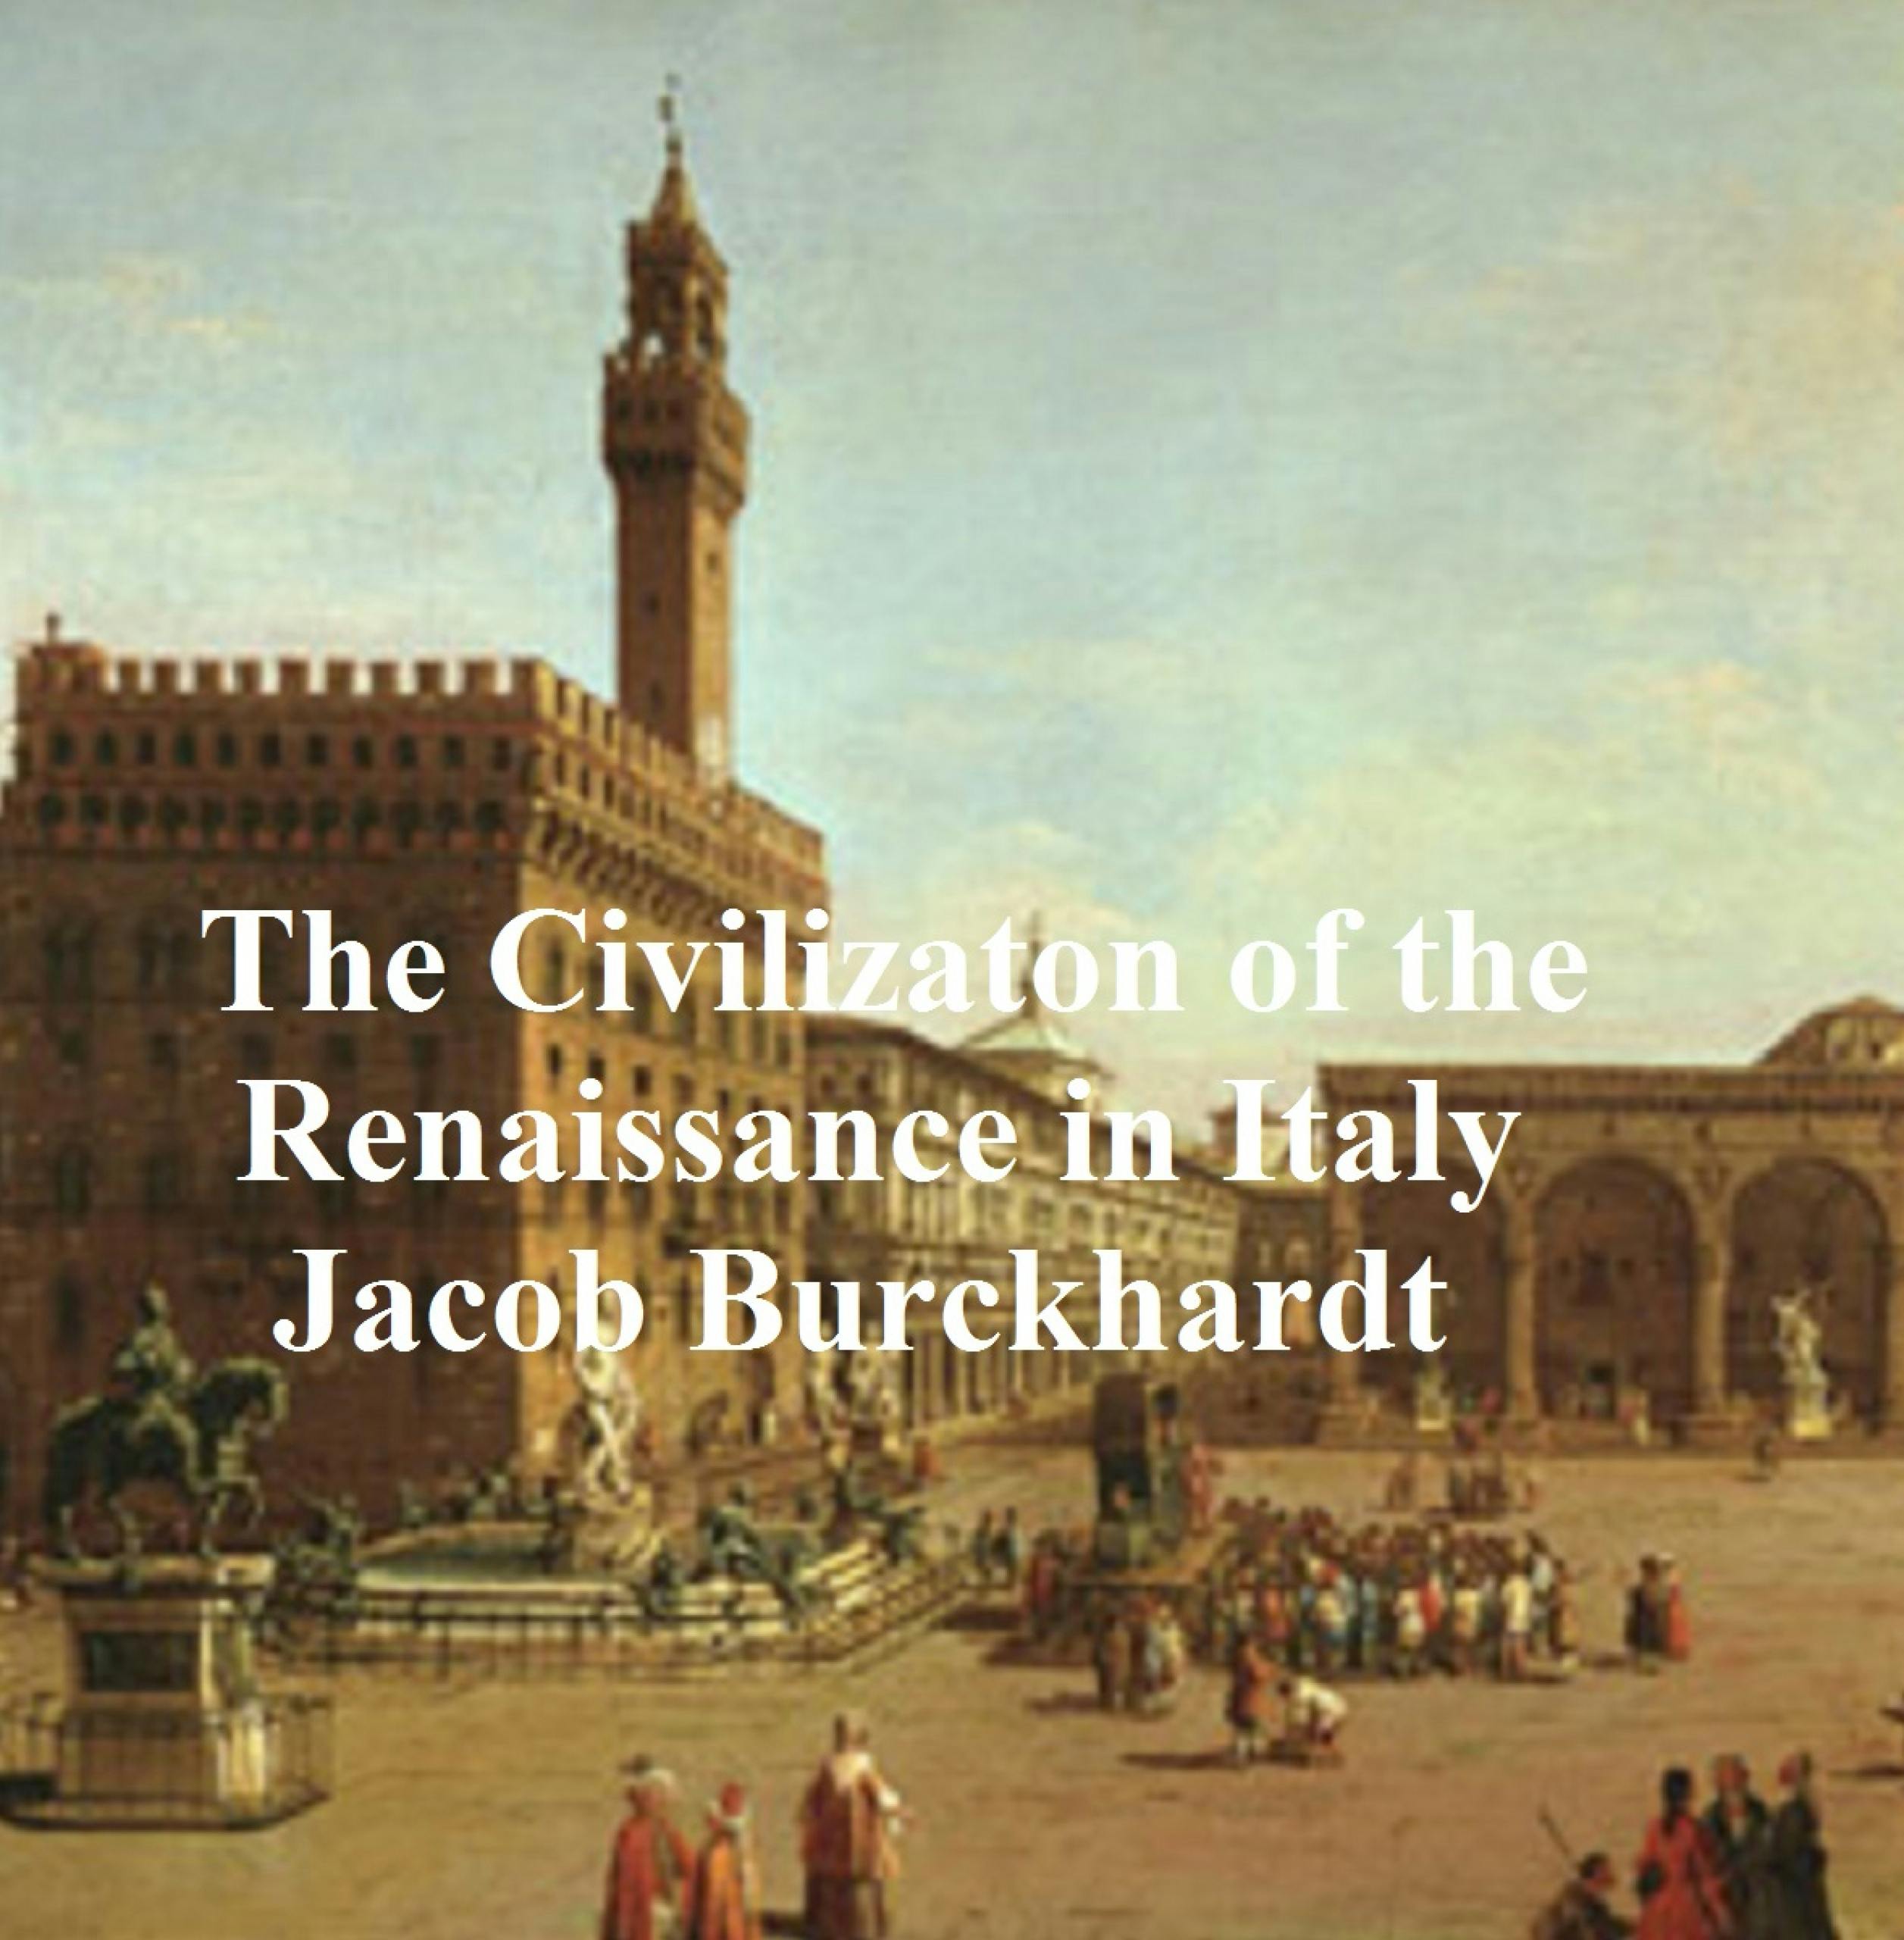 The Civilization of Renaissance in Italy - Jacob Burckhardt